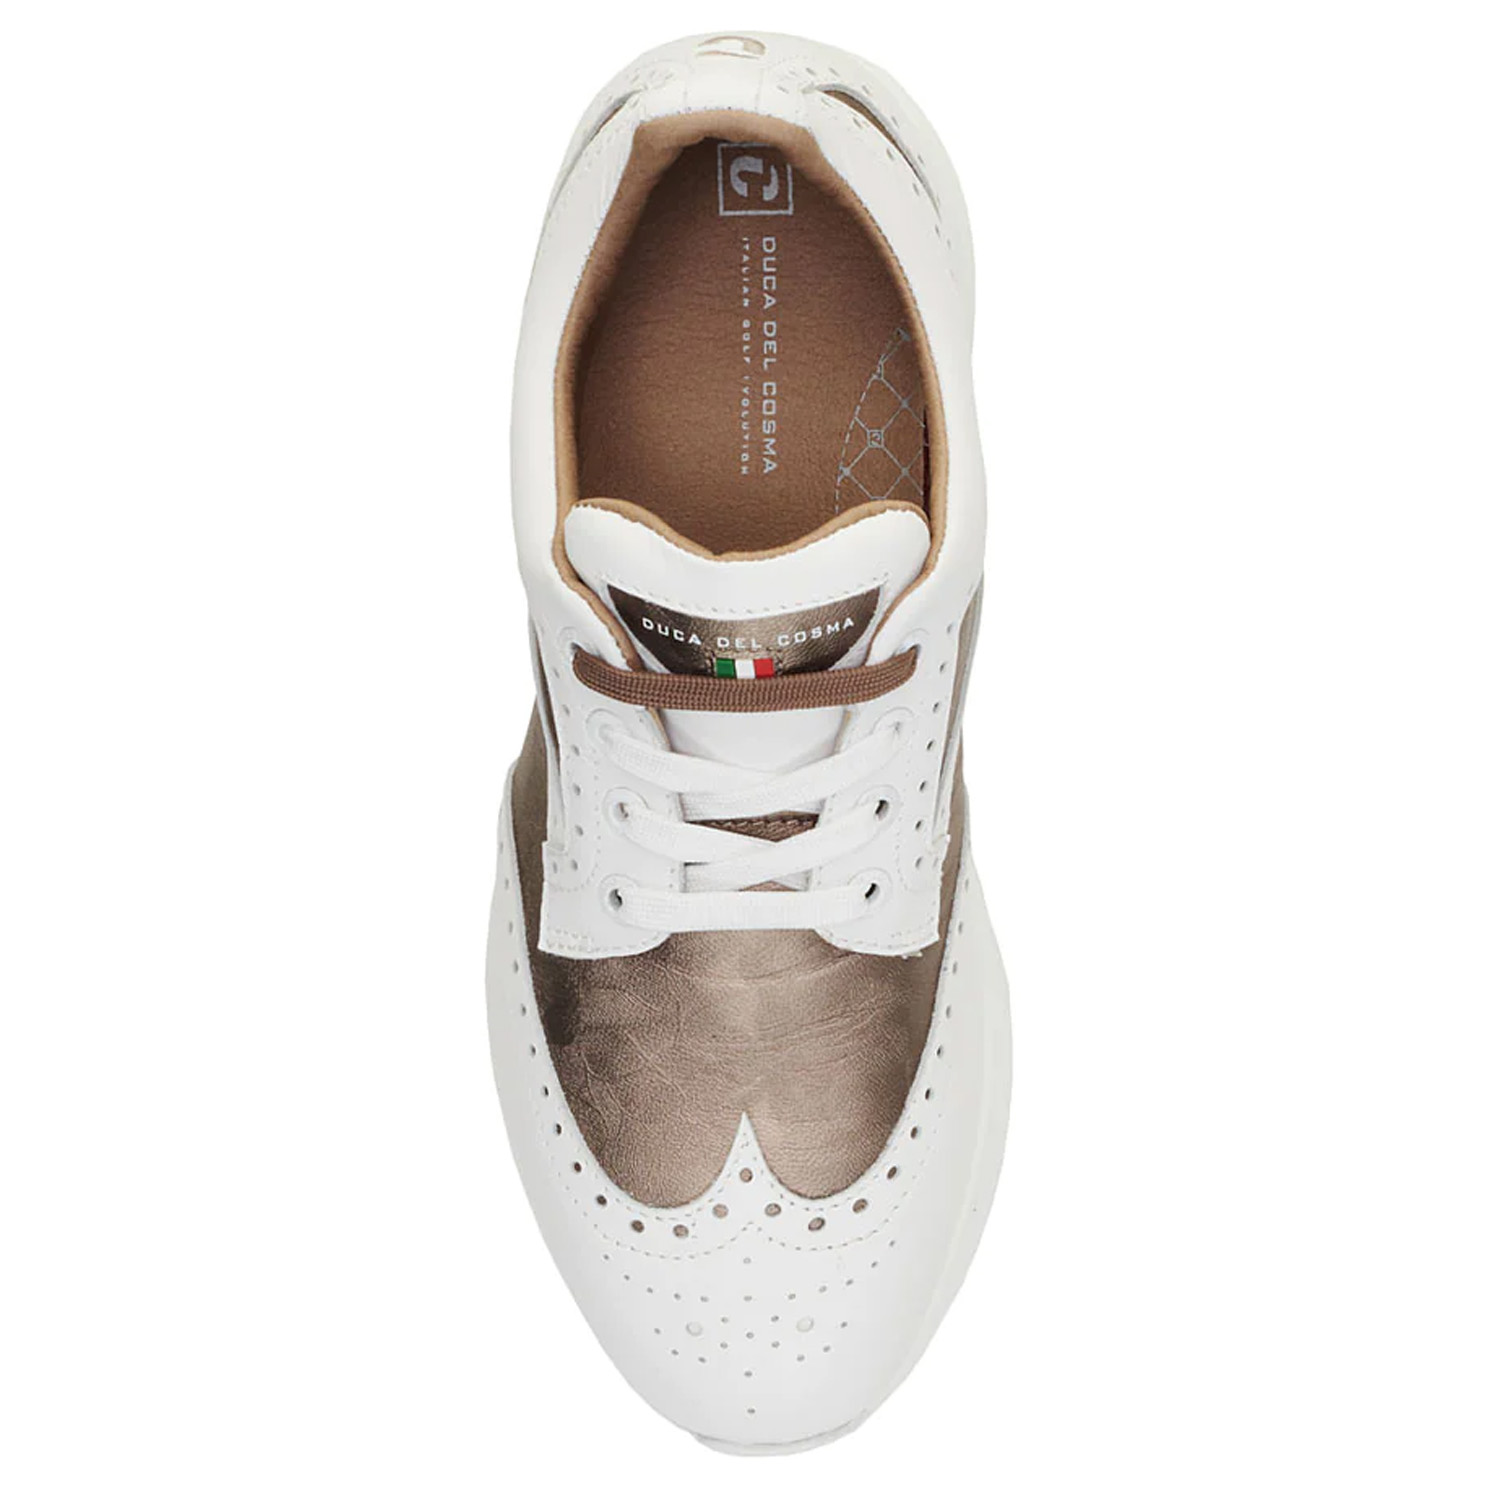 Duca del Cosma Serena Ladies Golf Shoes White/Taupe | Scottsdale Golf